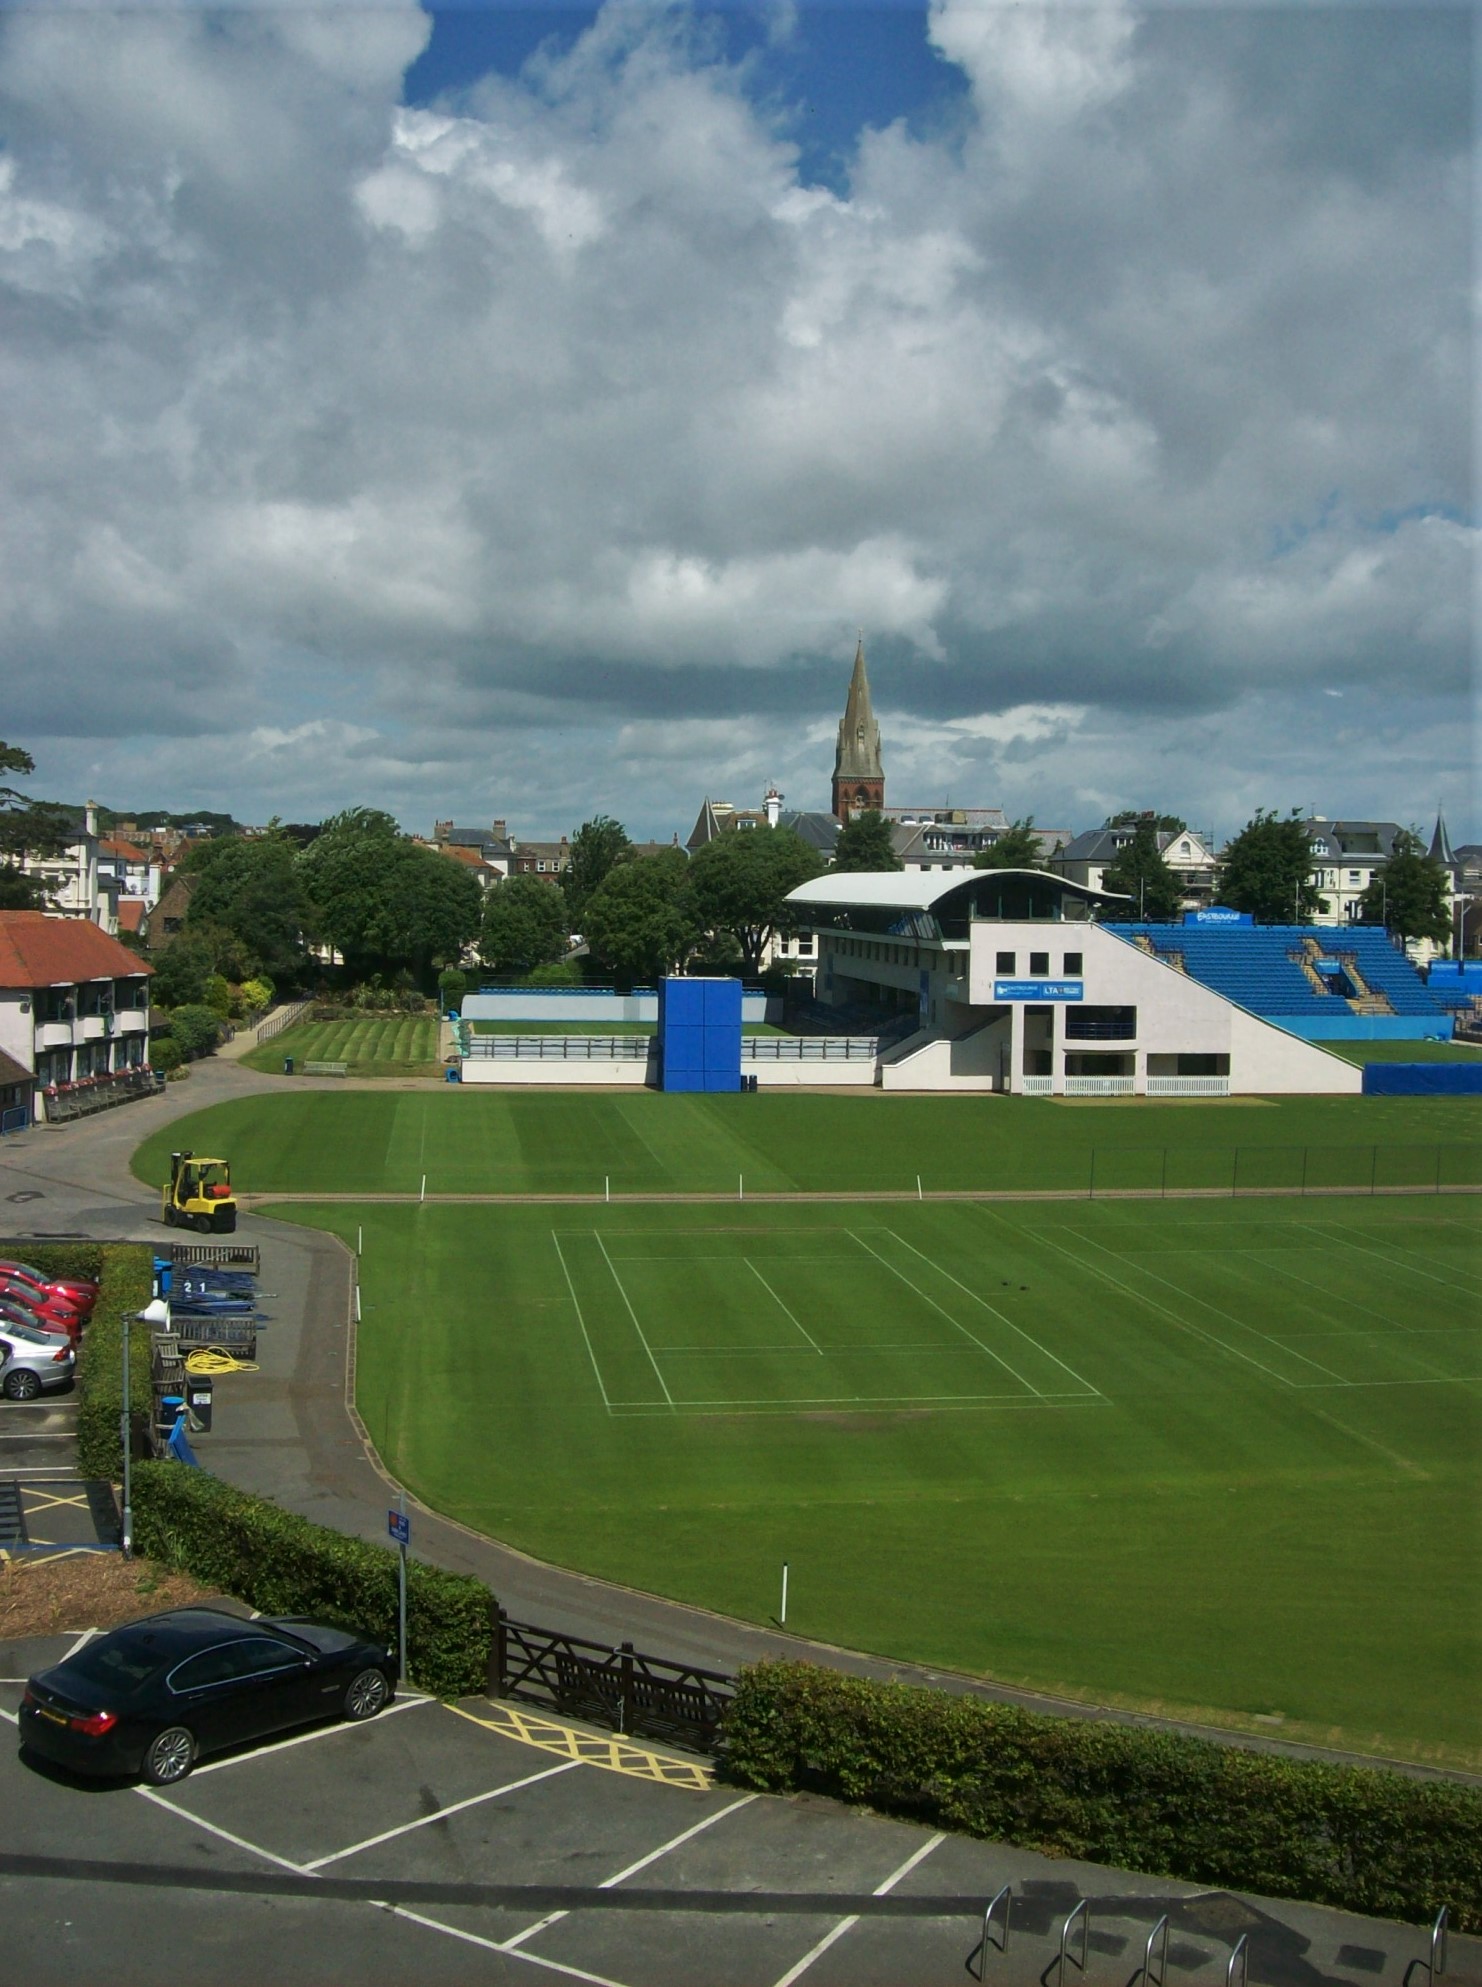 Devonshire Park Lawn Tennis Club, host of the Eastbourne International